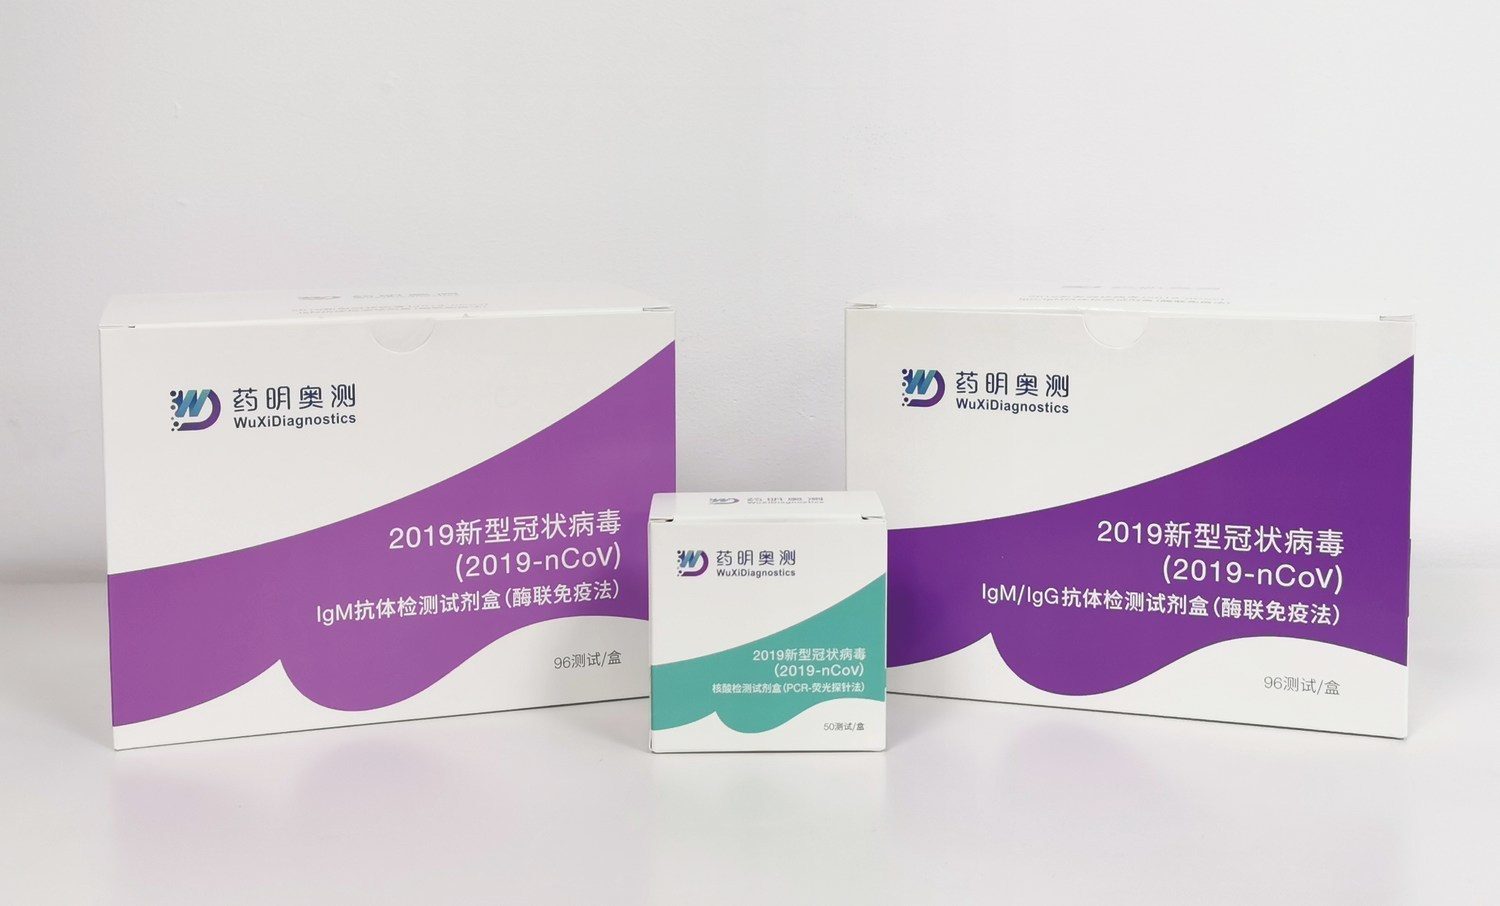 Chinese diagnostics firm WuXi Diagnostics raises $150m in Series B round